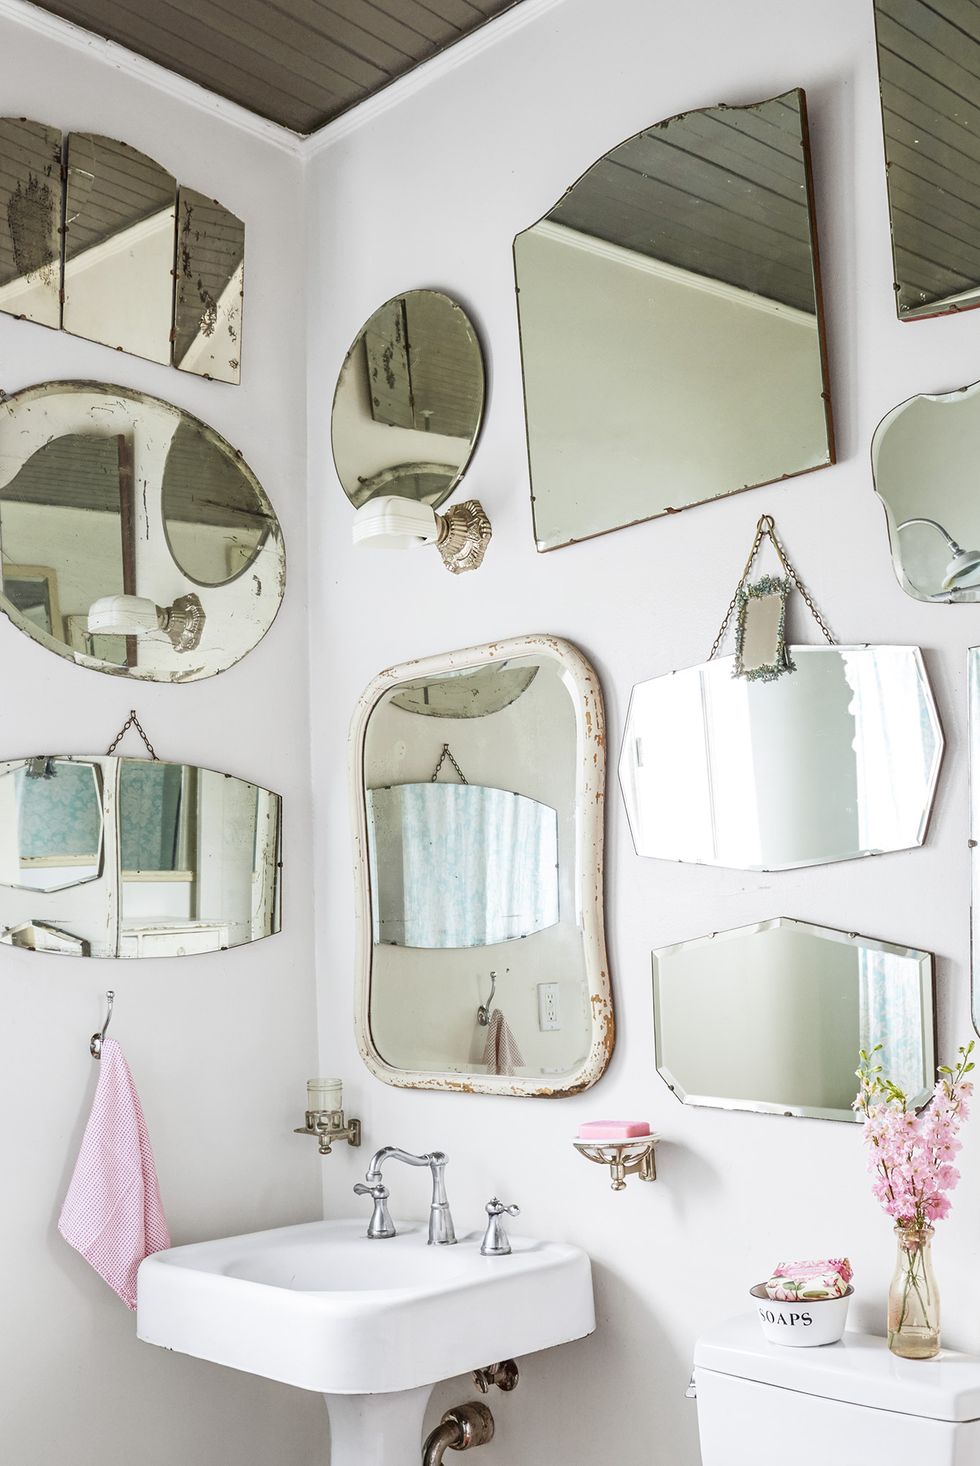 Aesthetic Girls Toilet Mirror Round Standing Makeup Small Mirror